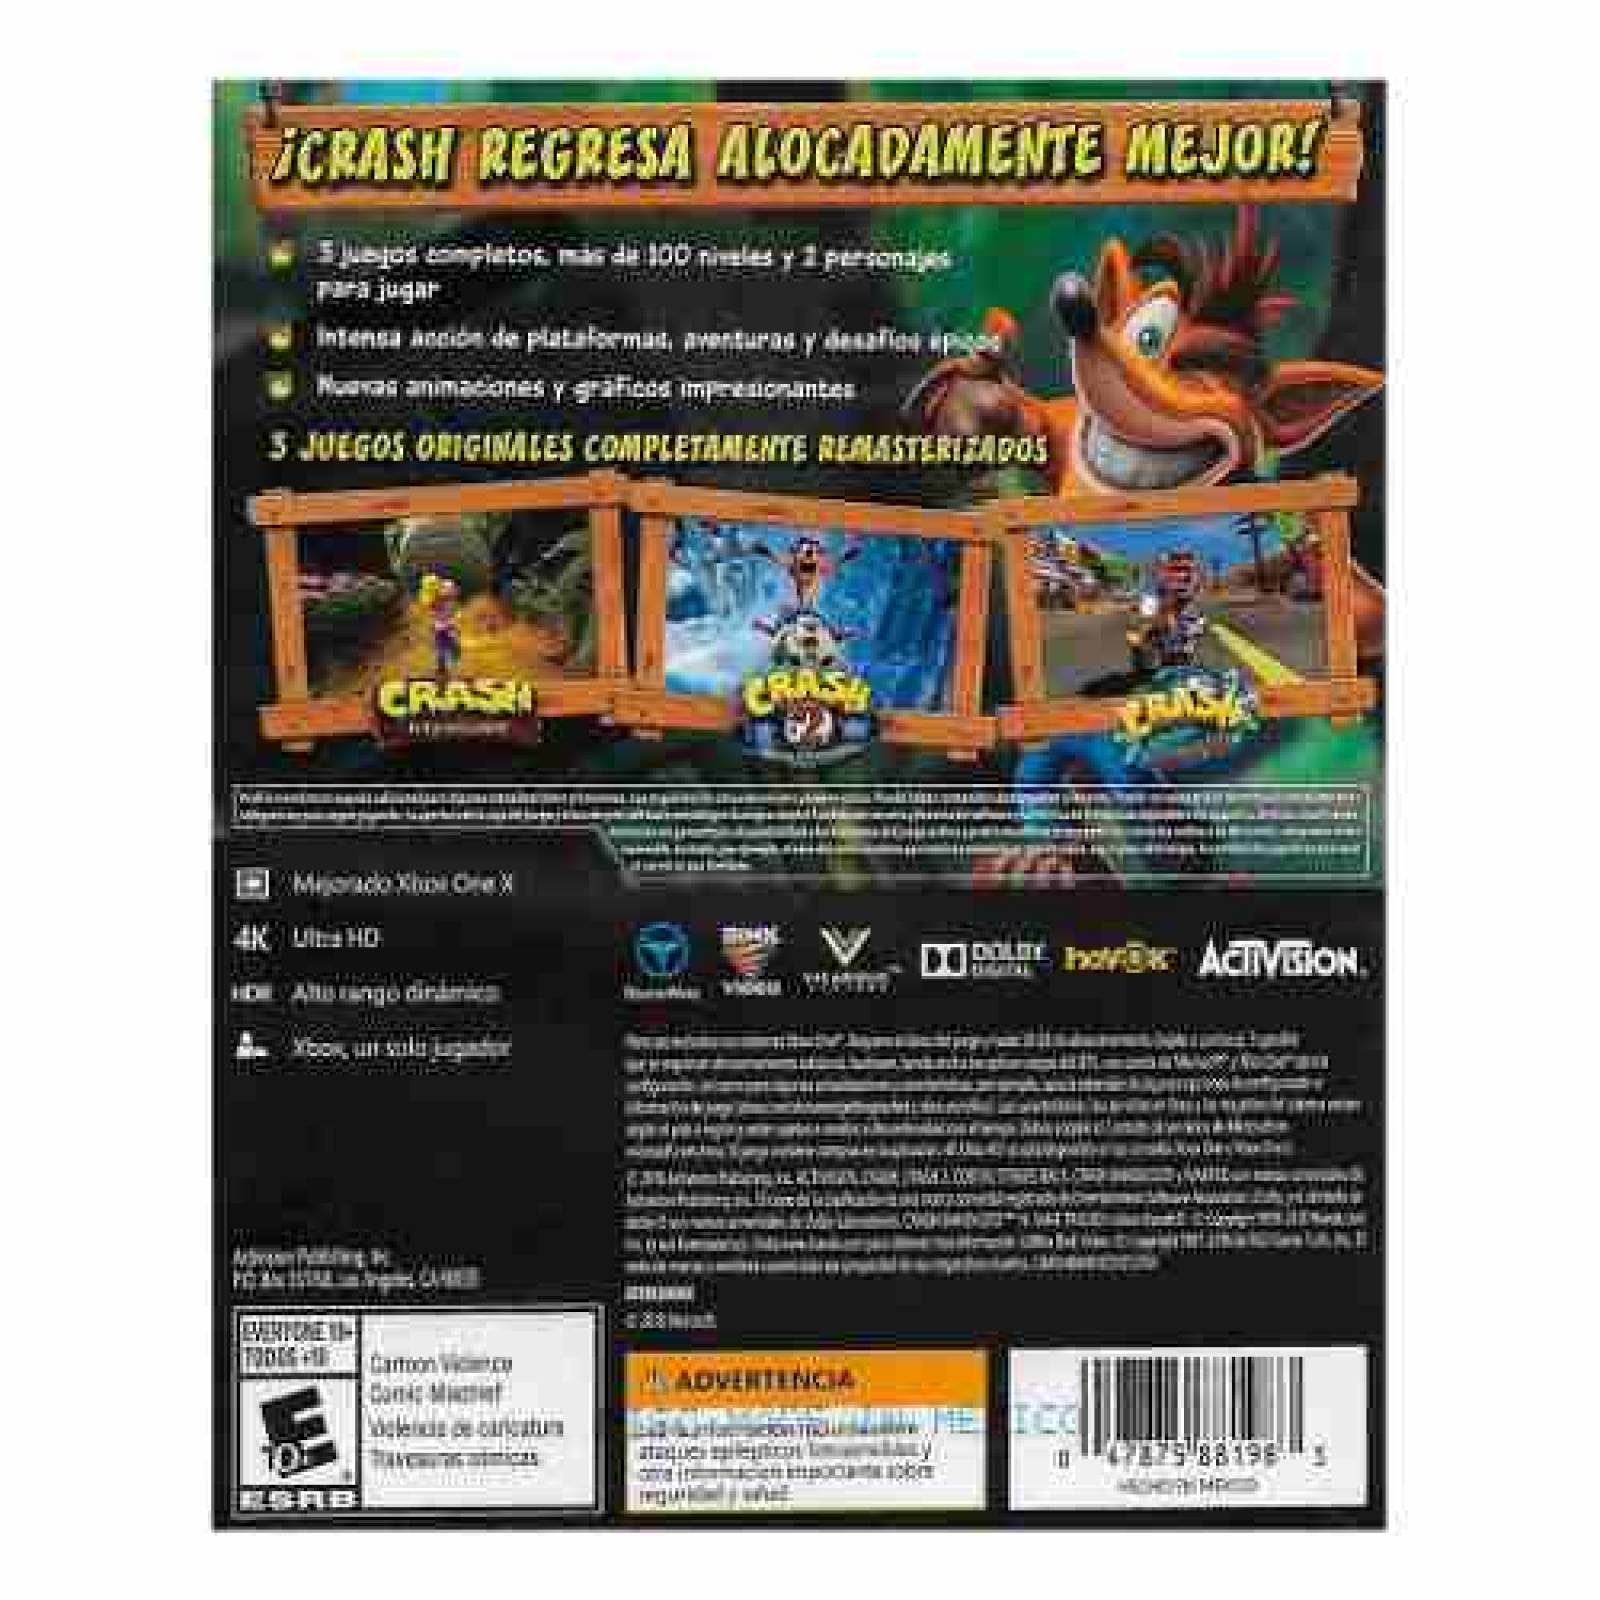 Videojuego Xbox One Crash Bandicoot Sane Trilogy Activision